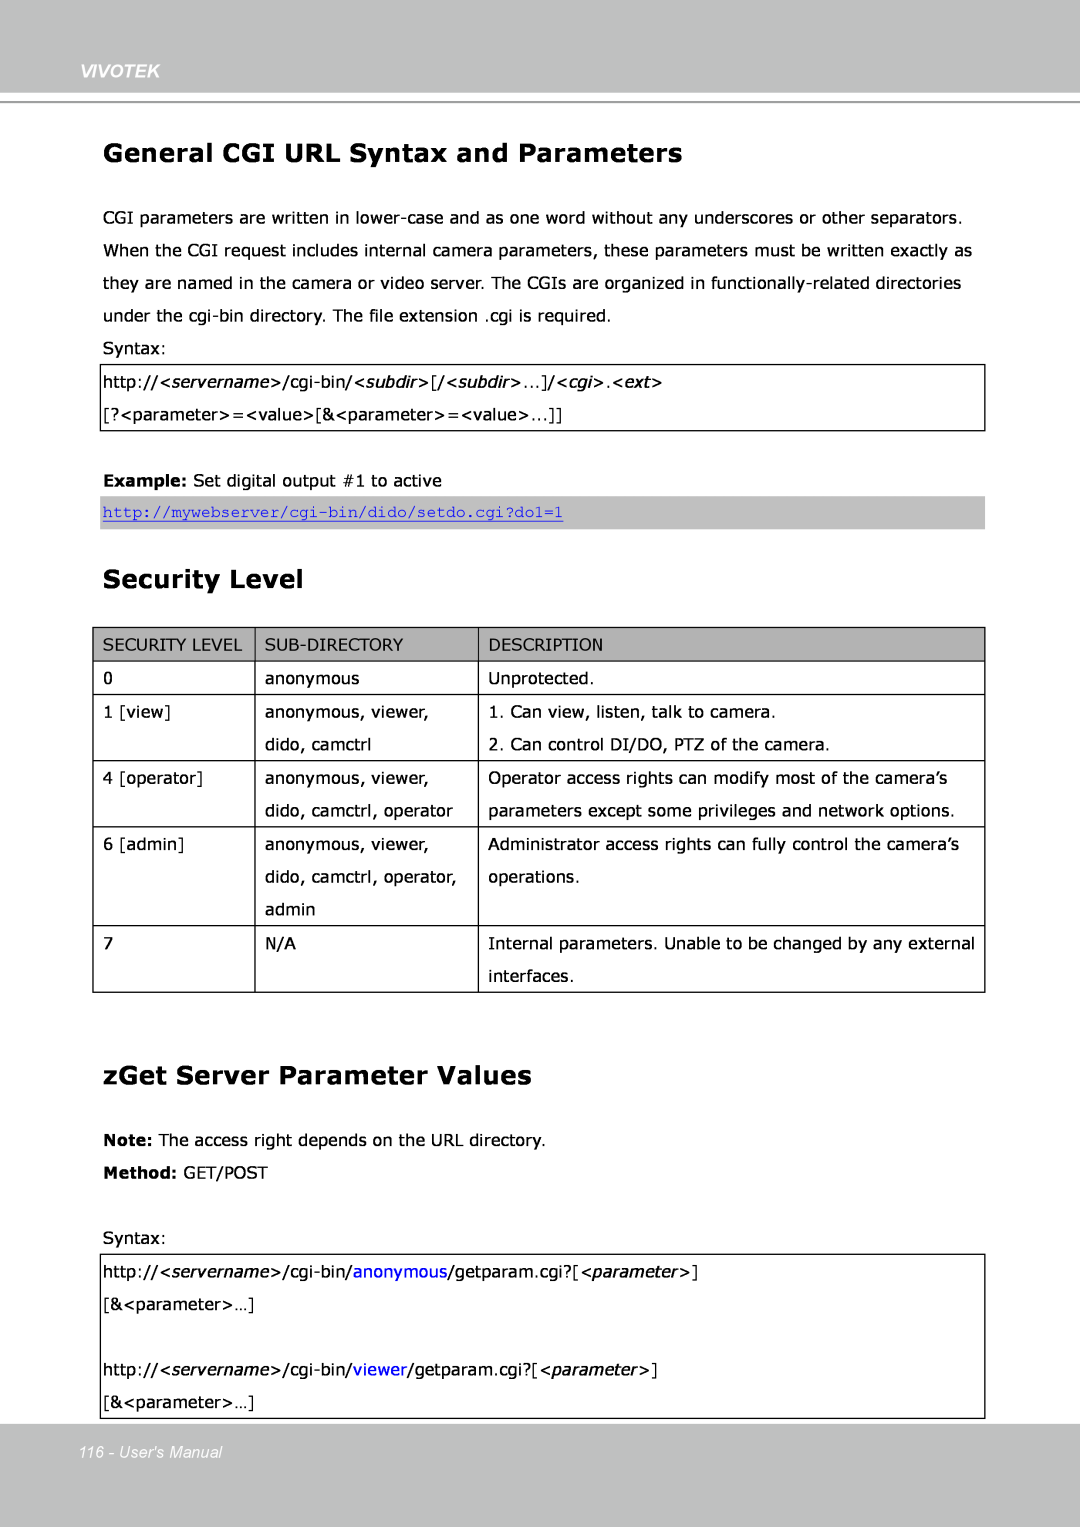 Vivotek IP8361 General CGI URL Syntax and Parameters, Security Level, zGet Server Parameter Values, Vivotek, Users Manual 